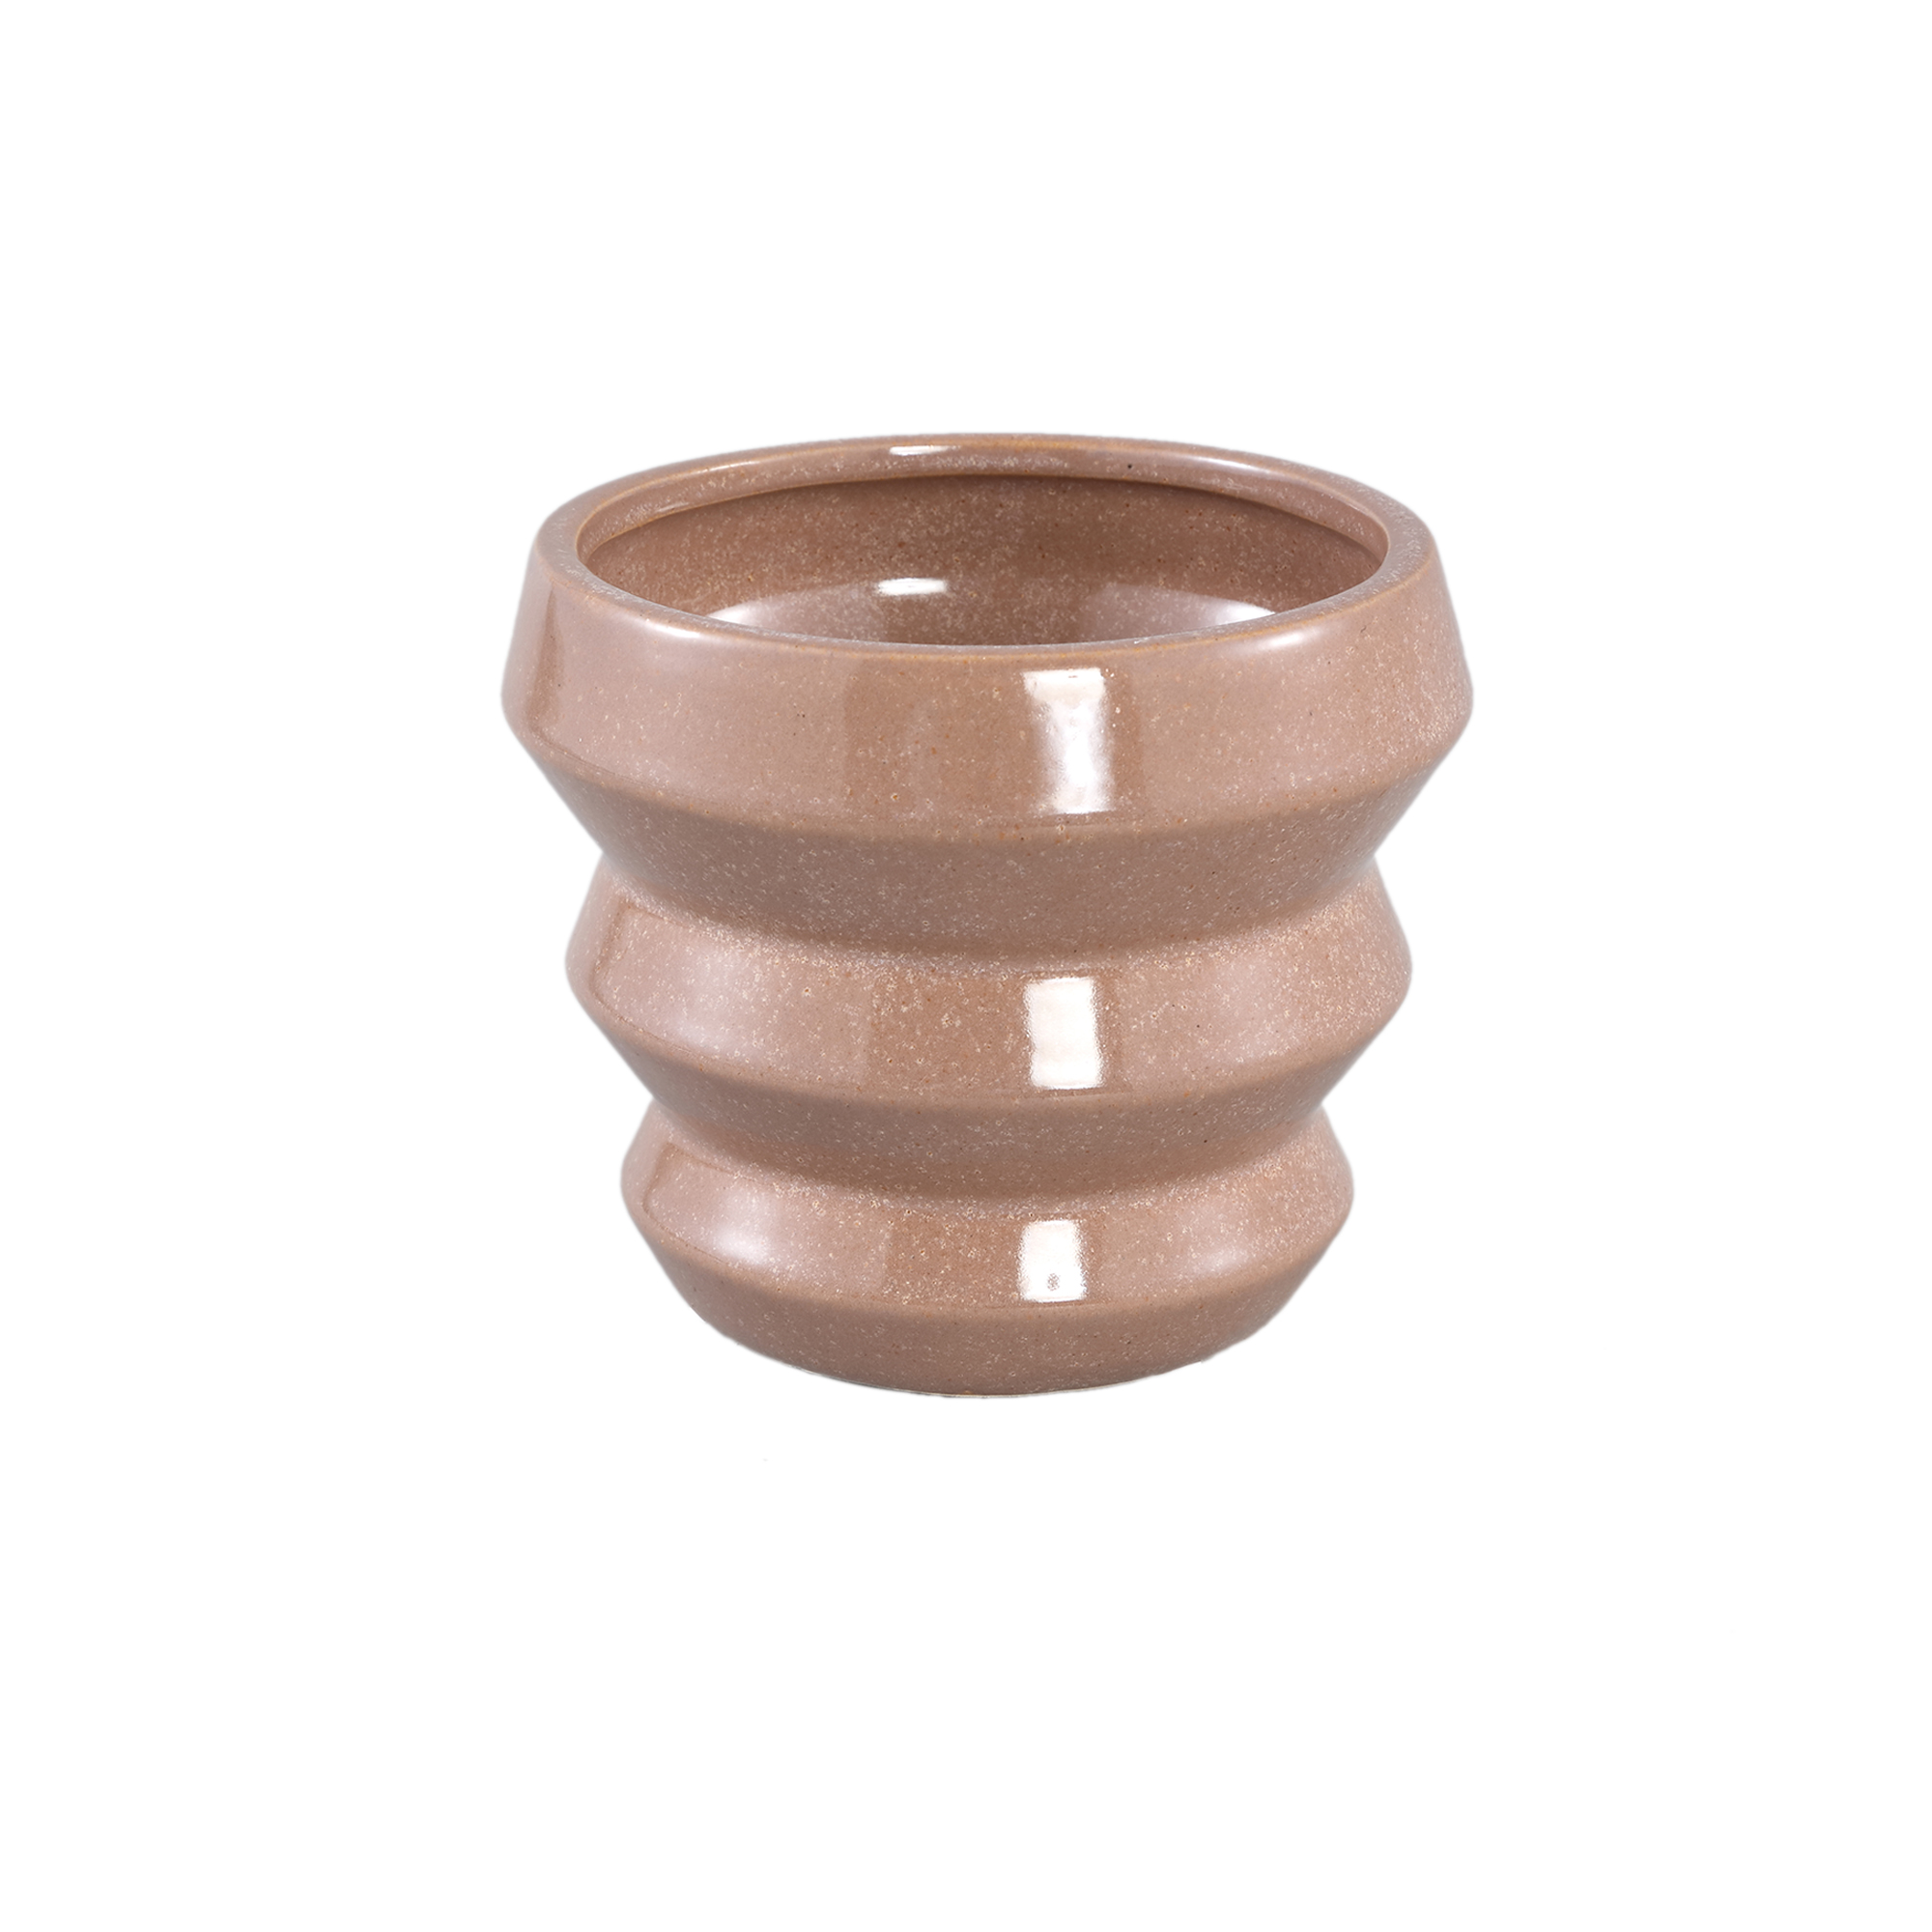 Tims Brown glazed ceramic pot ribbed round M